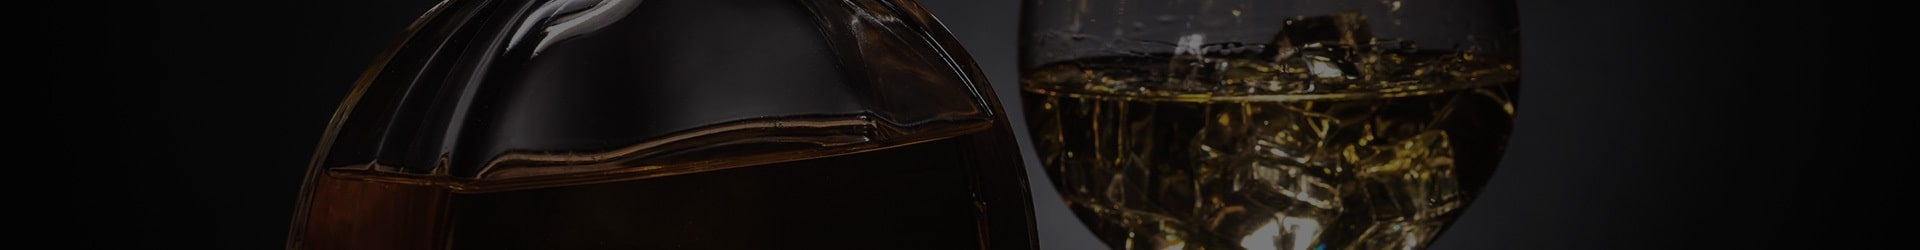 Our Selection of Napoléon Cognac|Shop Online